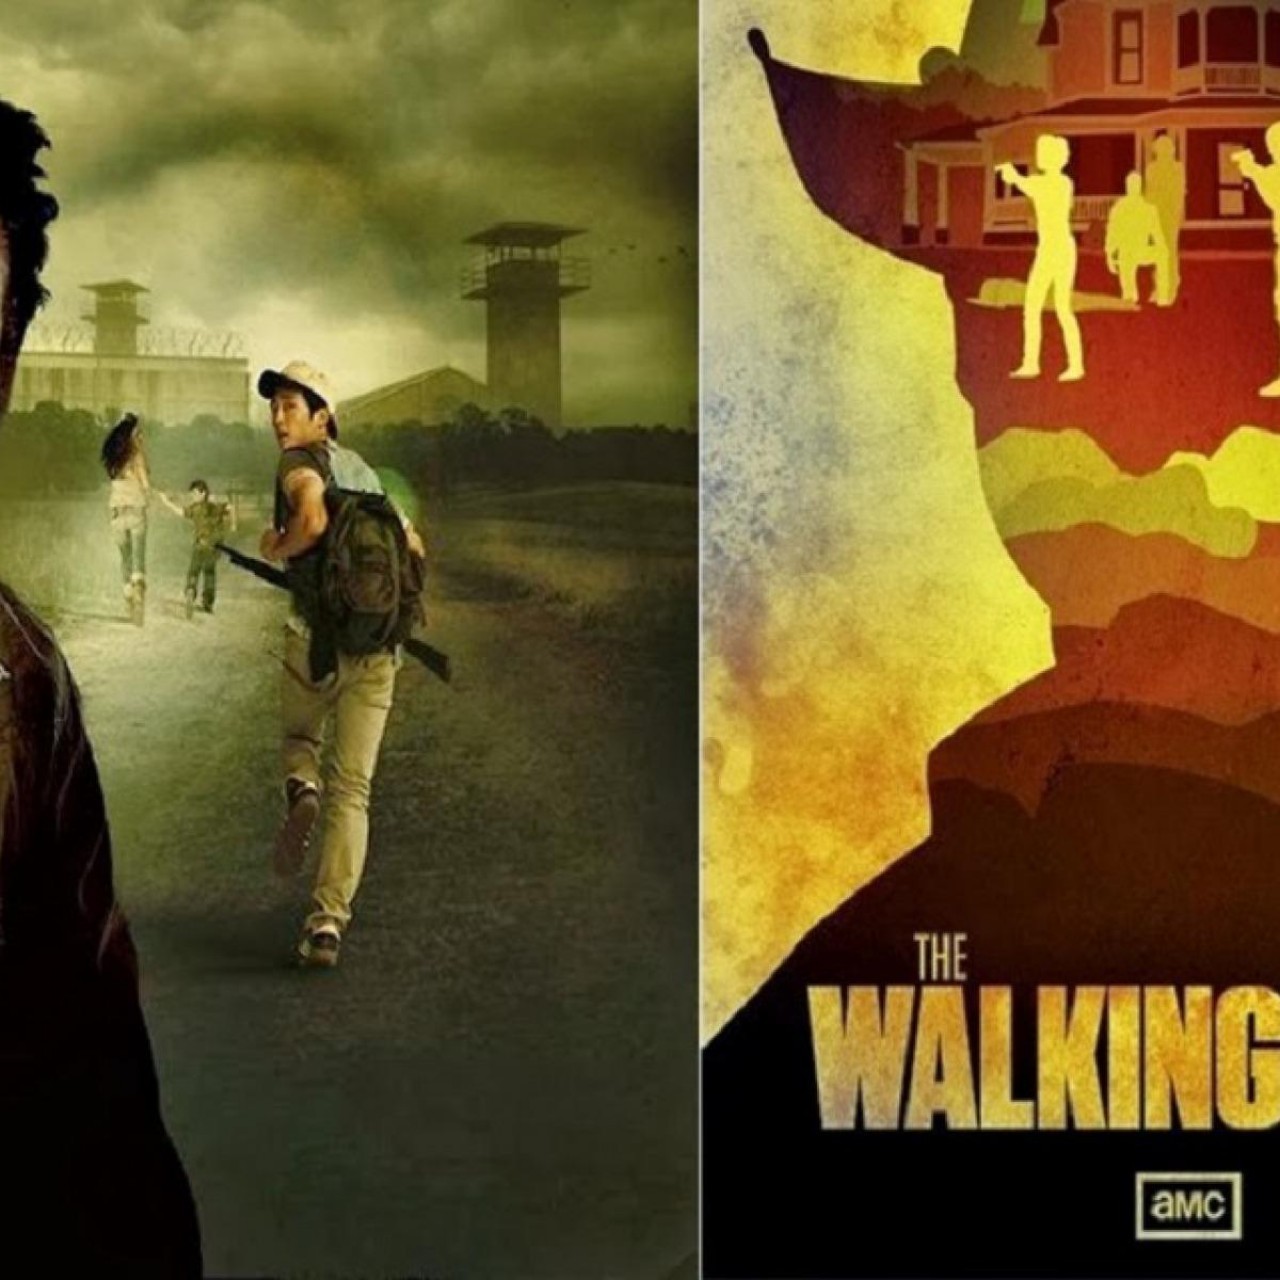 The Walking Dead 1280x1280 wallpaper download Cool hd wallpaper